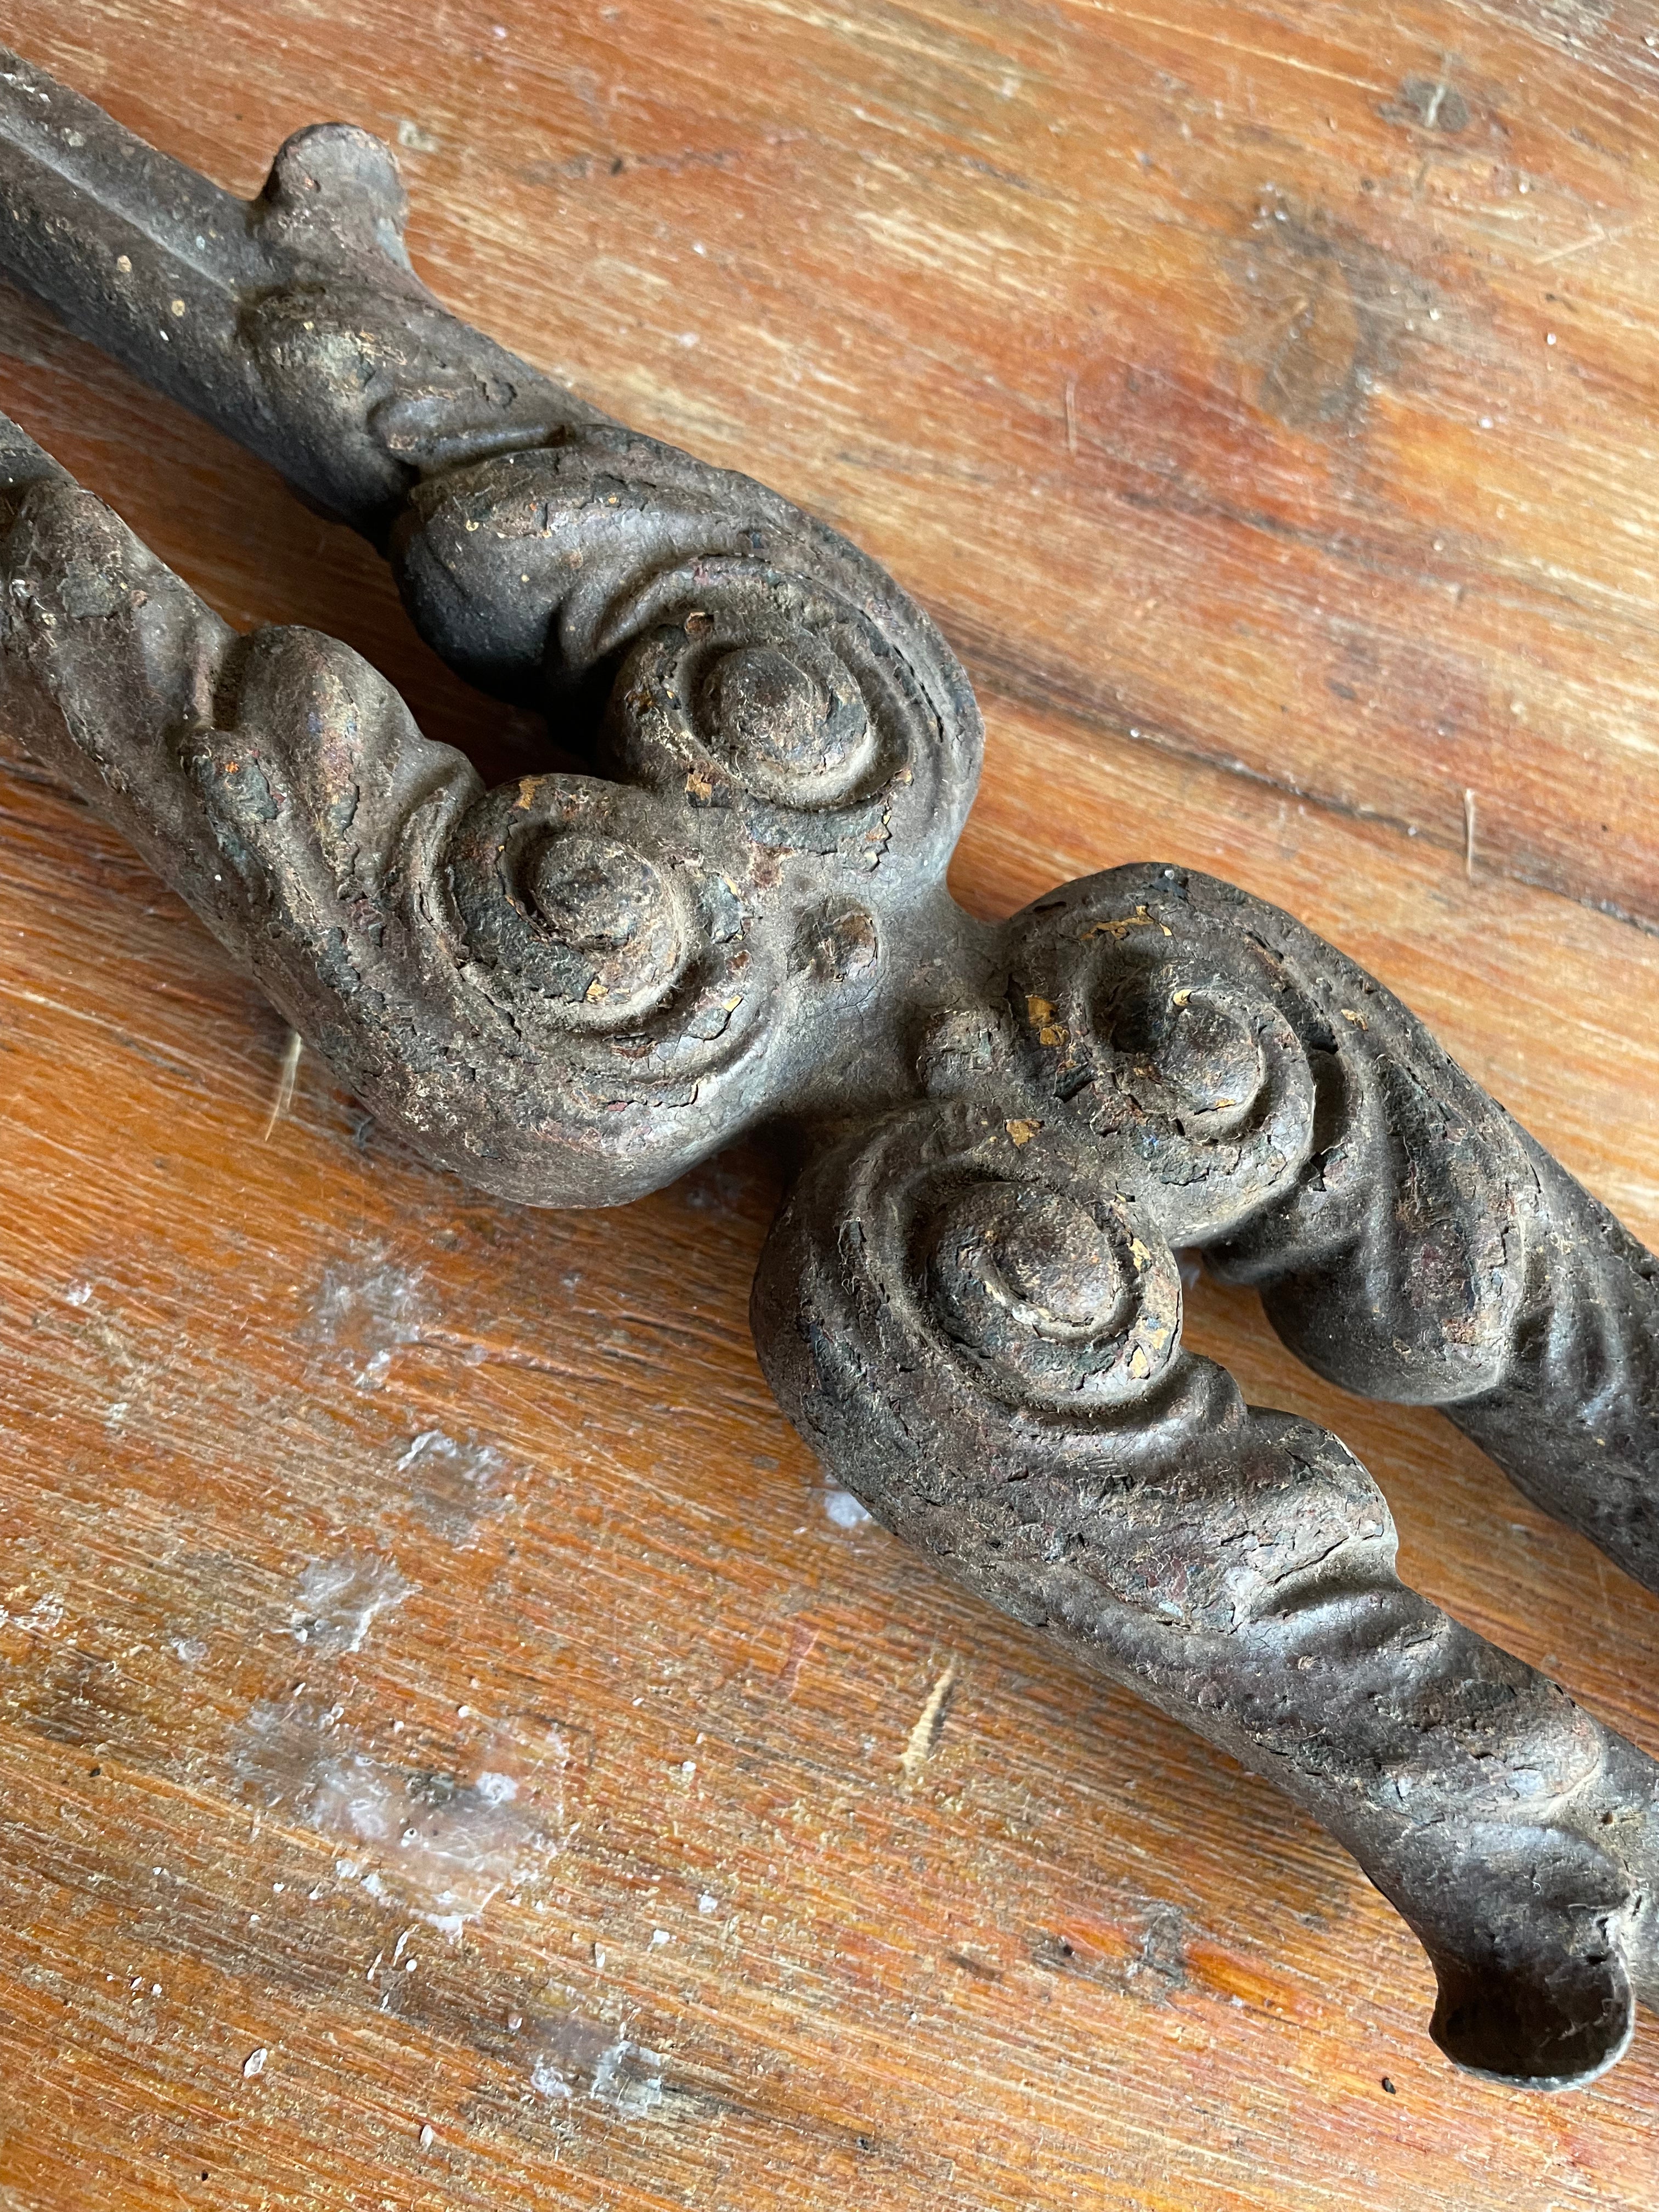 Antique Iron Balustrades  - priced individually